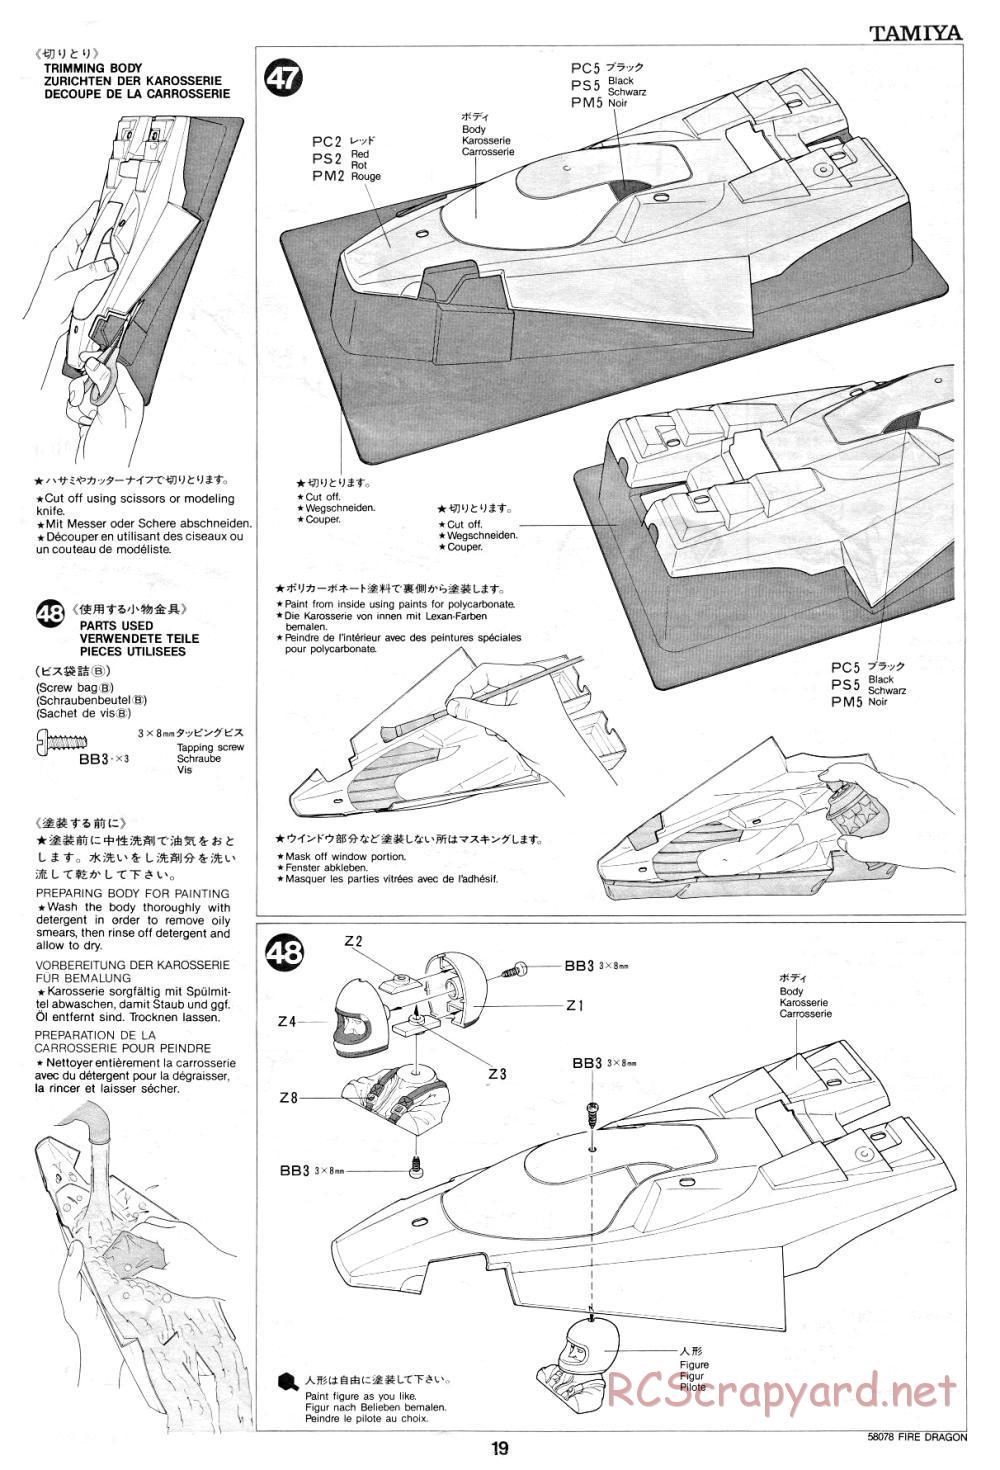 Tamiya - Fire Dragon - 58078 - Manual - Page 19